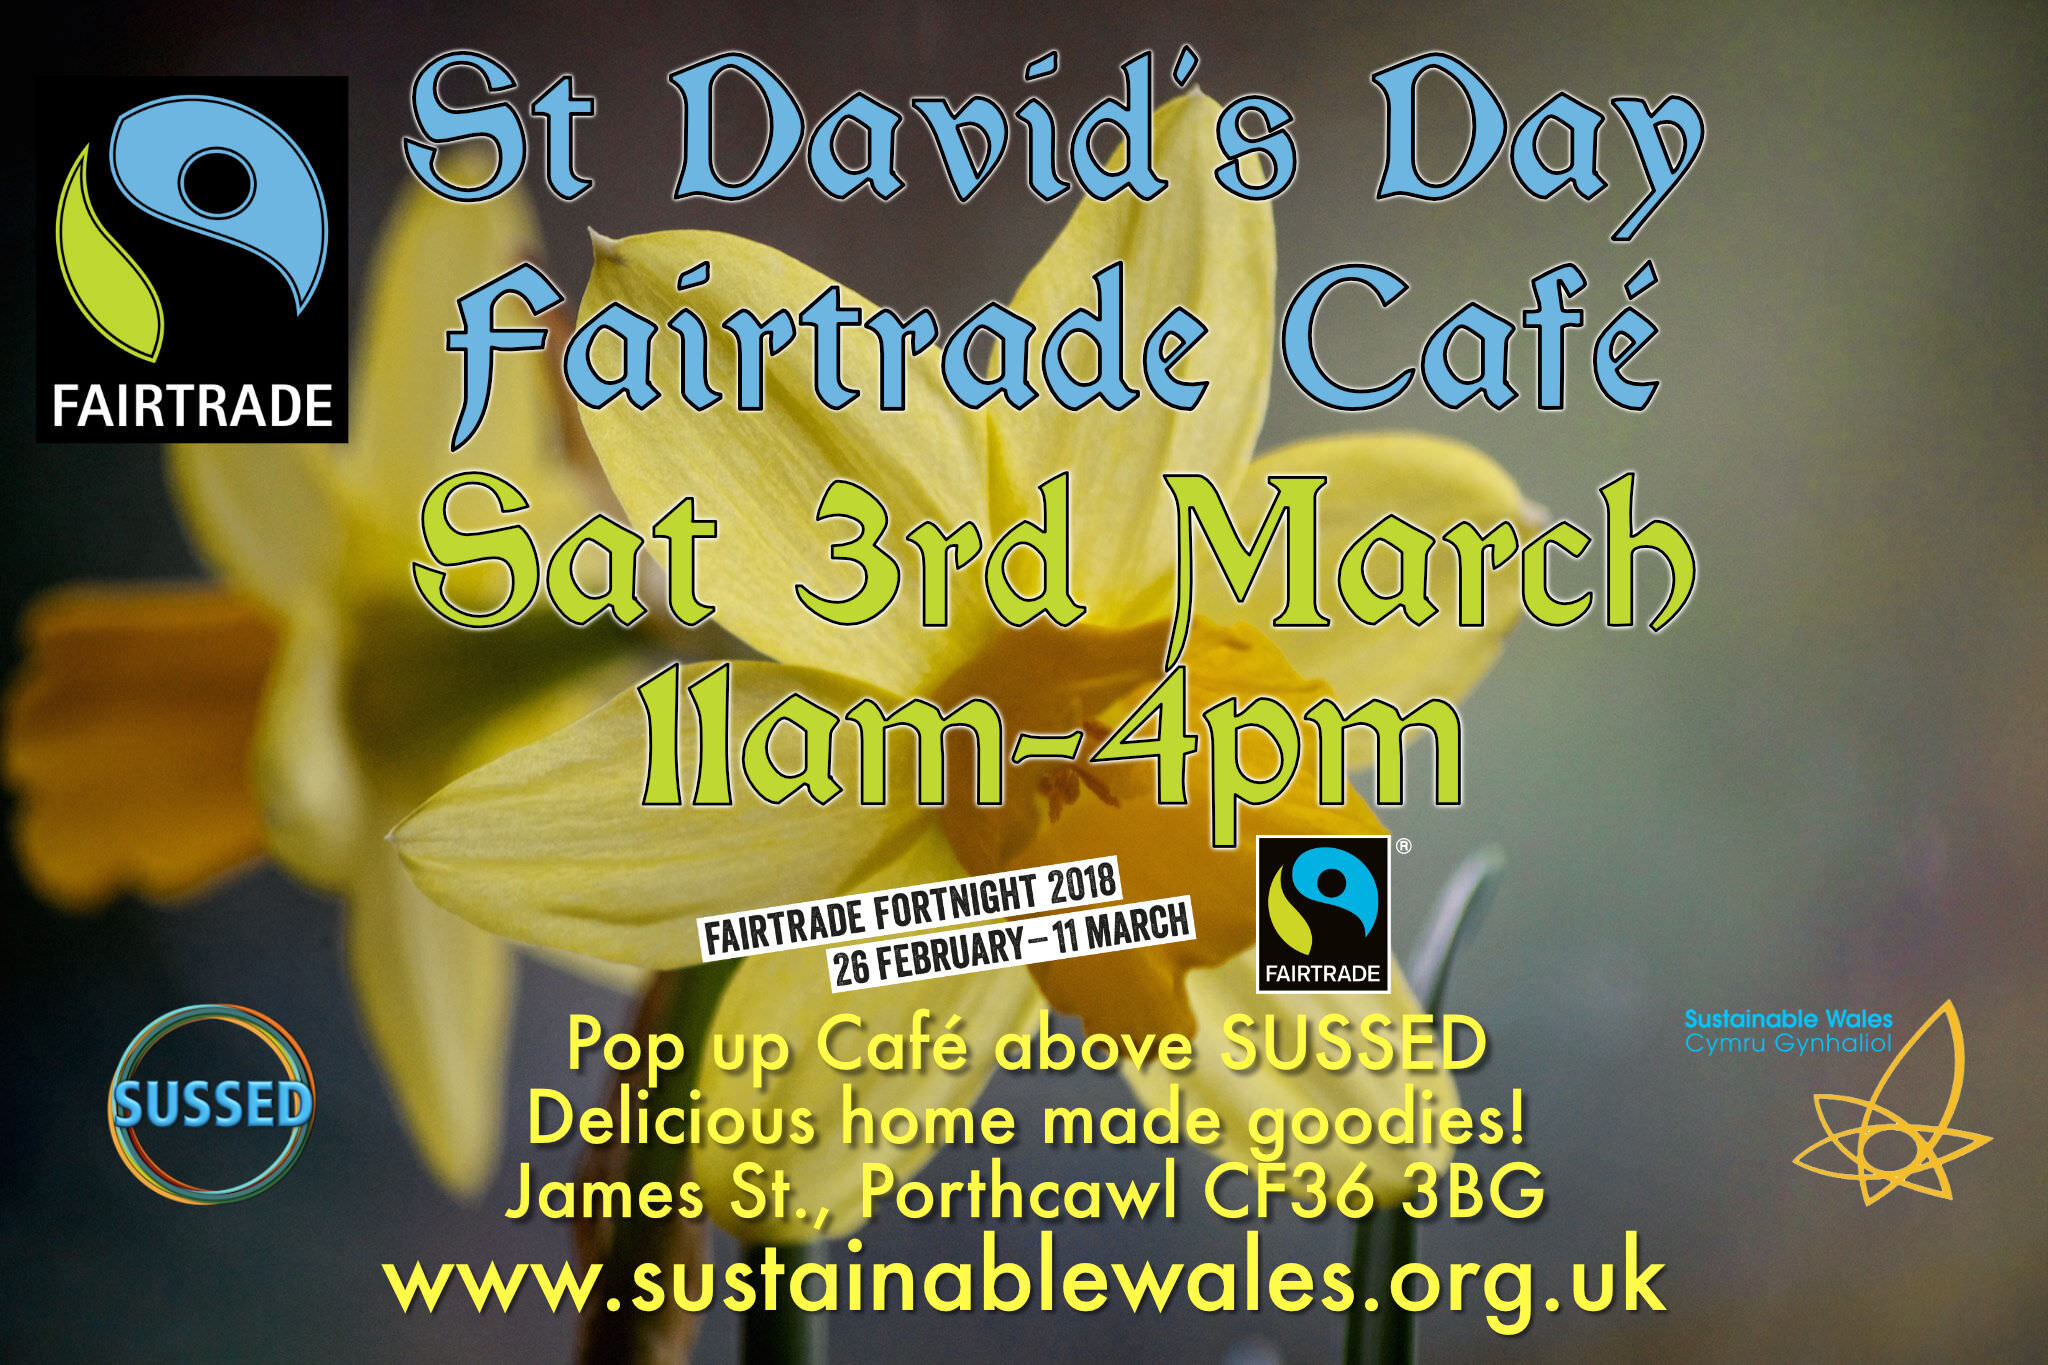 Daffodils david day cafe.jpg